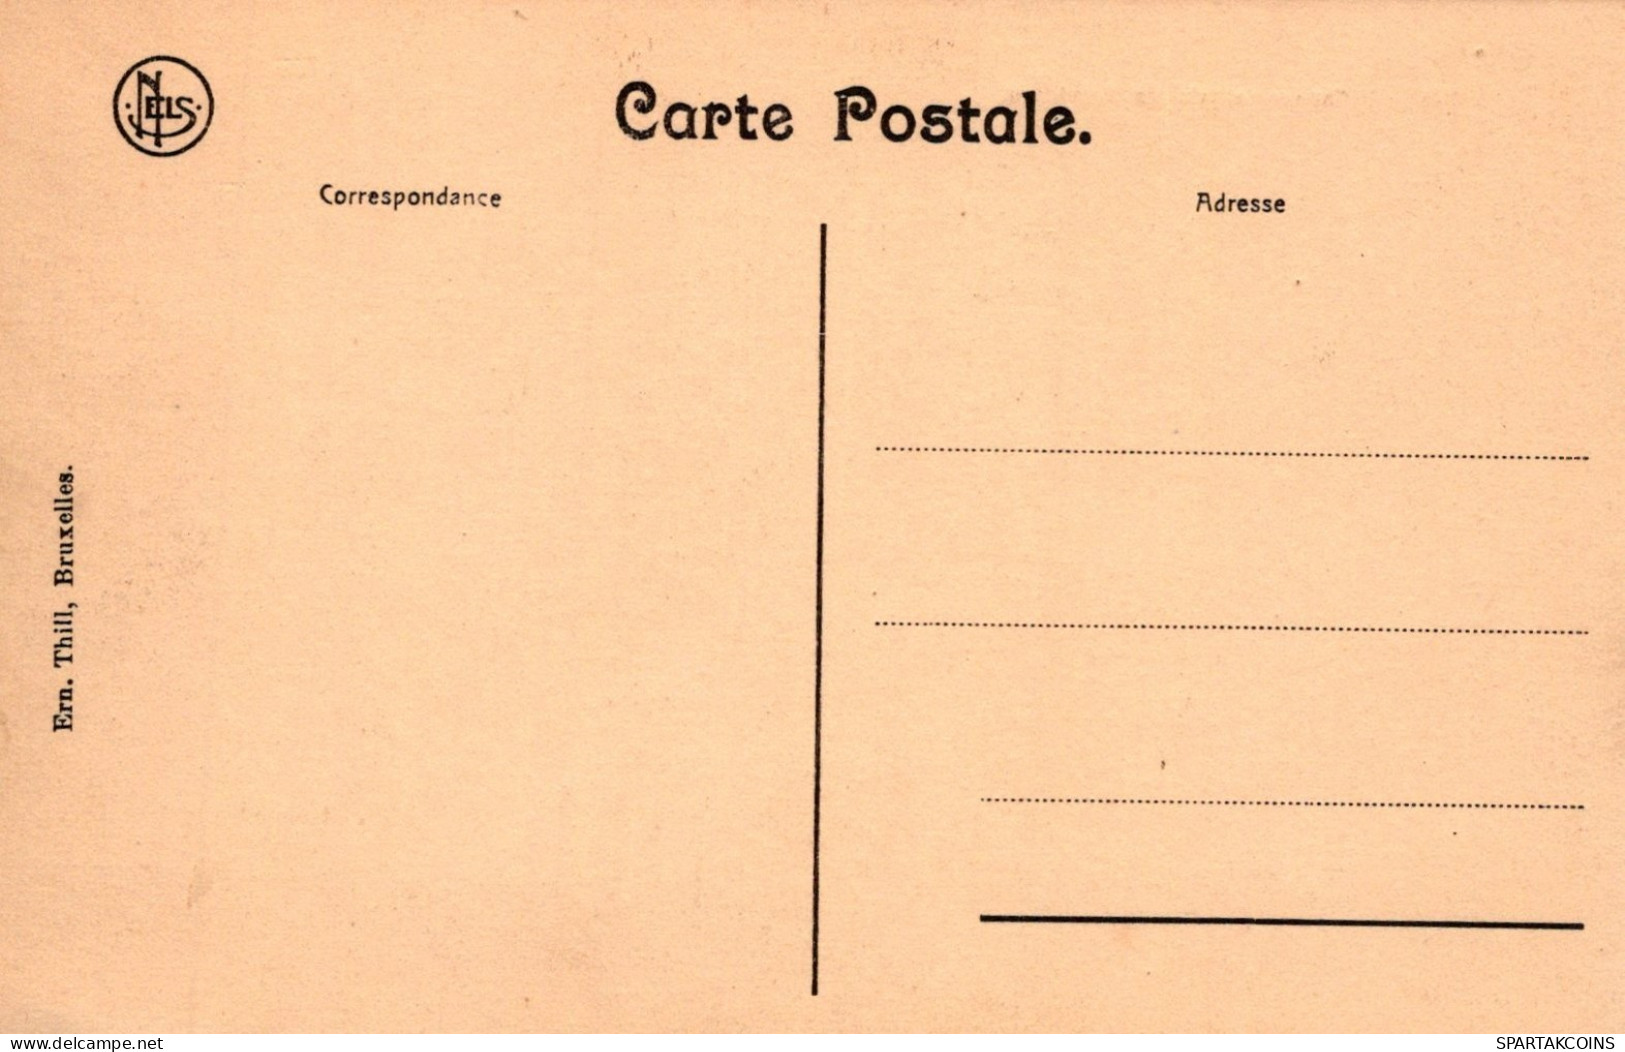 BELGIEN COO WASSERFALL Provinz Lüttich (Liège) Postkarte CPA Unposted #PAD185.A - Stavelot